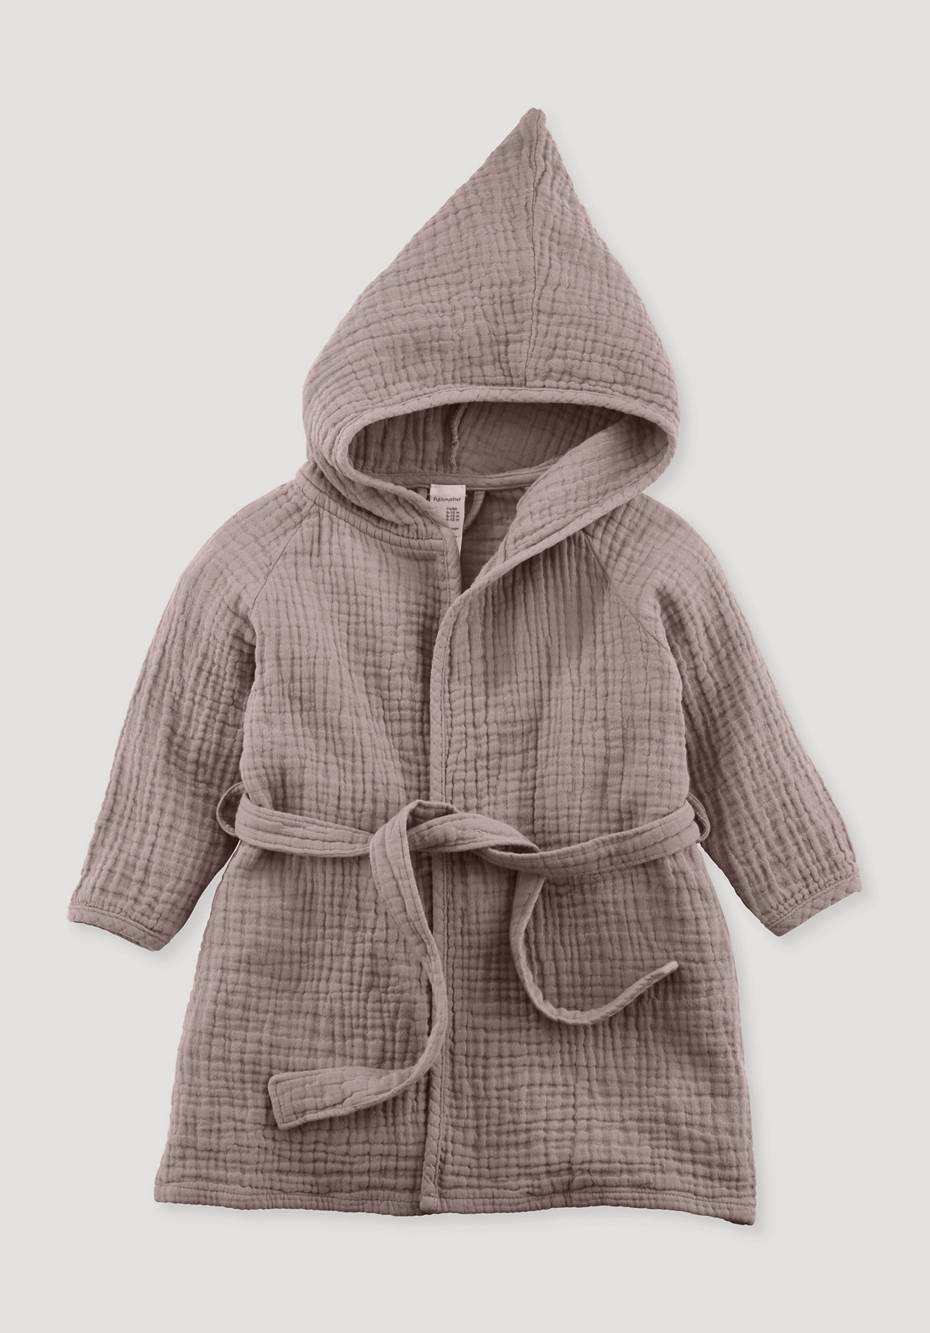 Muslin baby bathrobe made from pure organic cotton